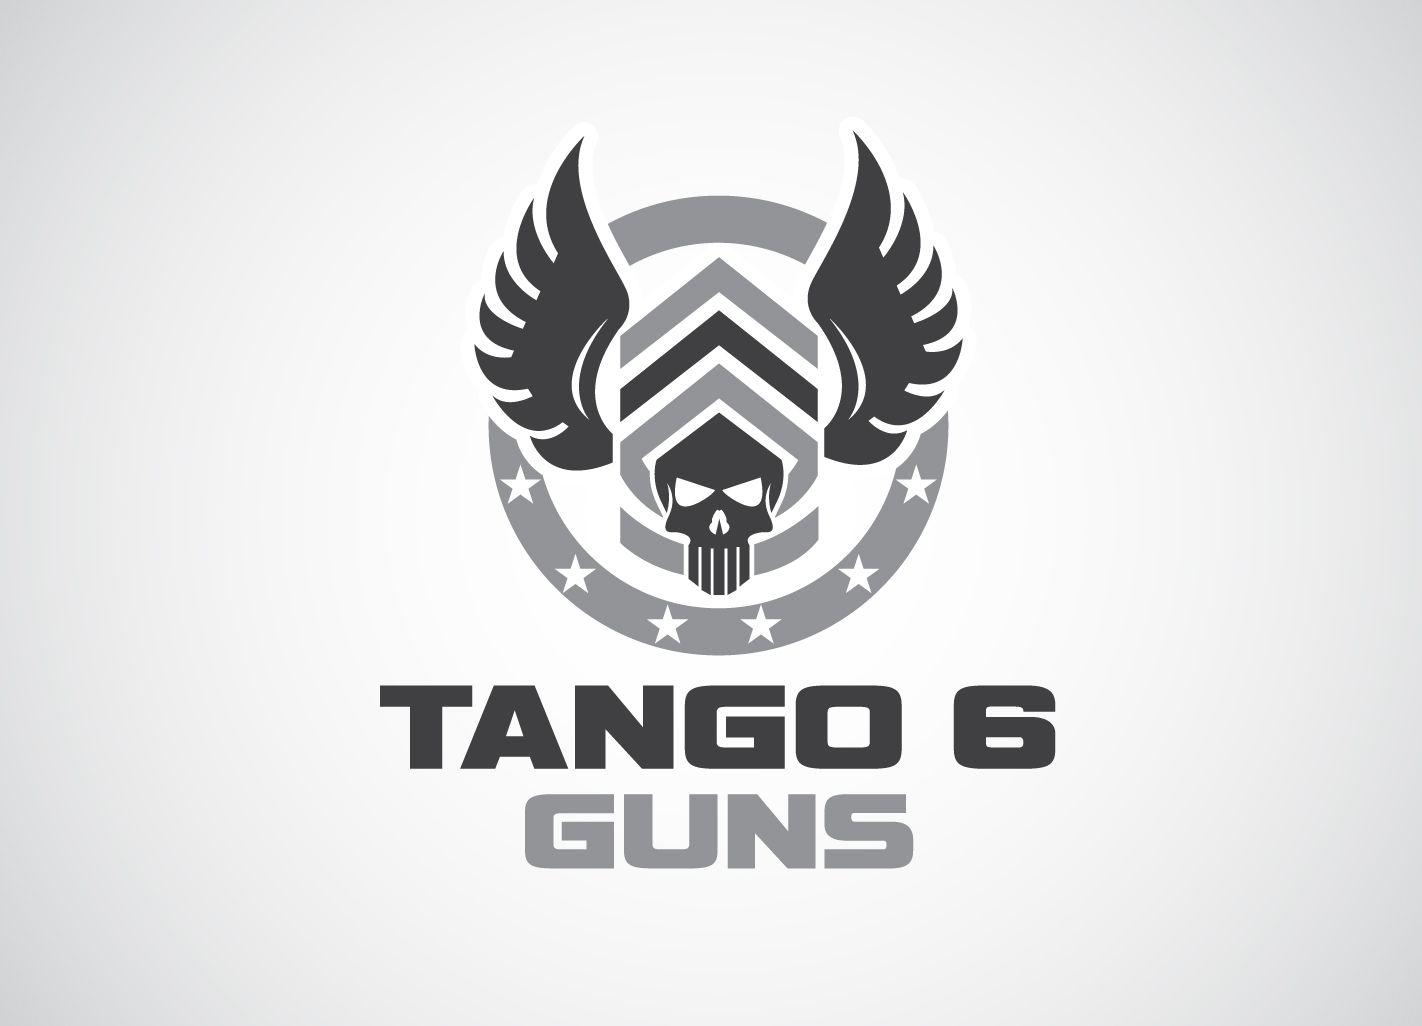 Guns Logo - Bold, Masculine, Gun Logo Design for See description 6 Guns